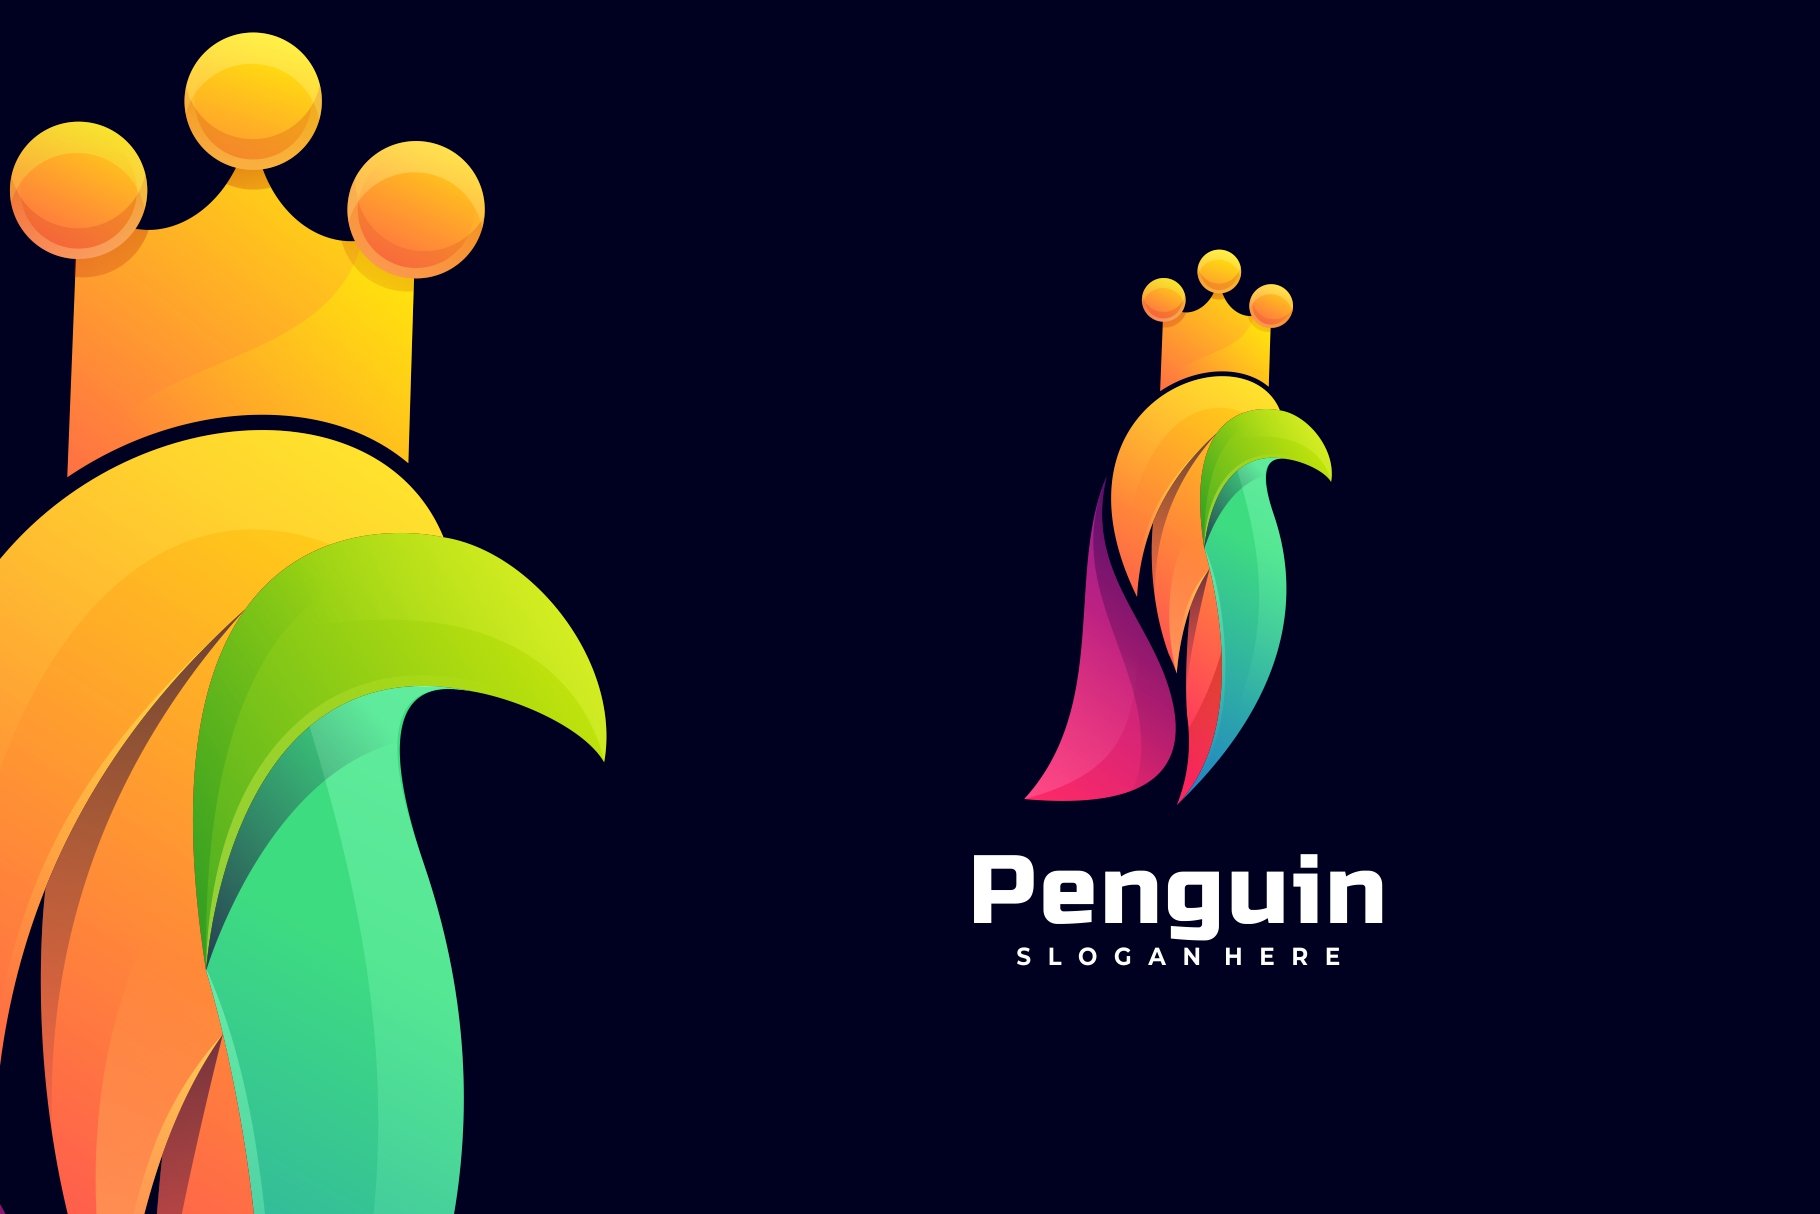 Penguin Gradient Colorful Logo cover image.